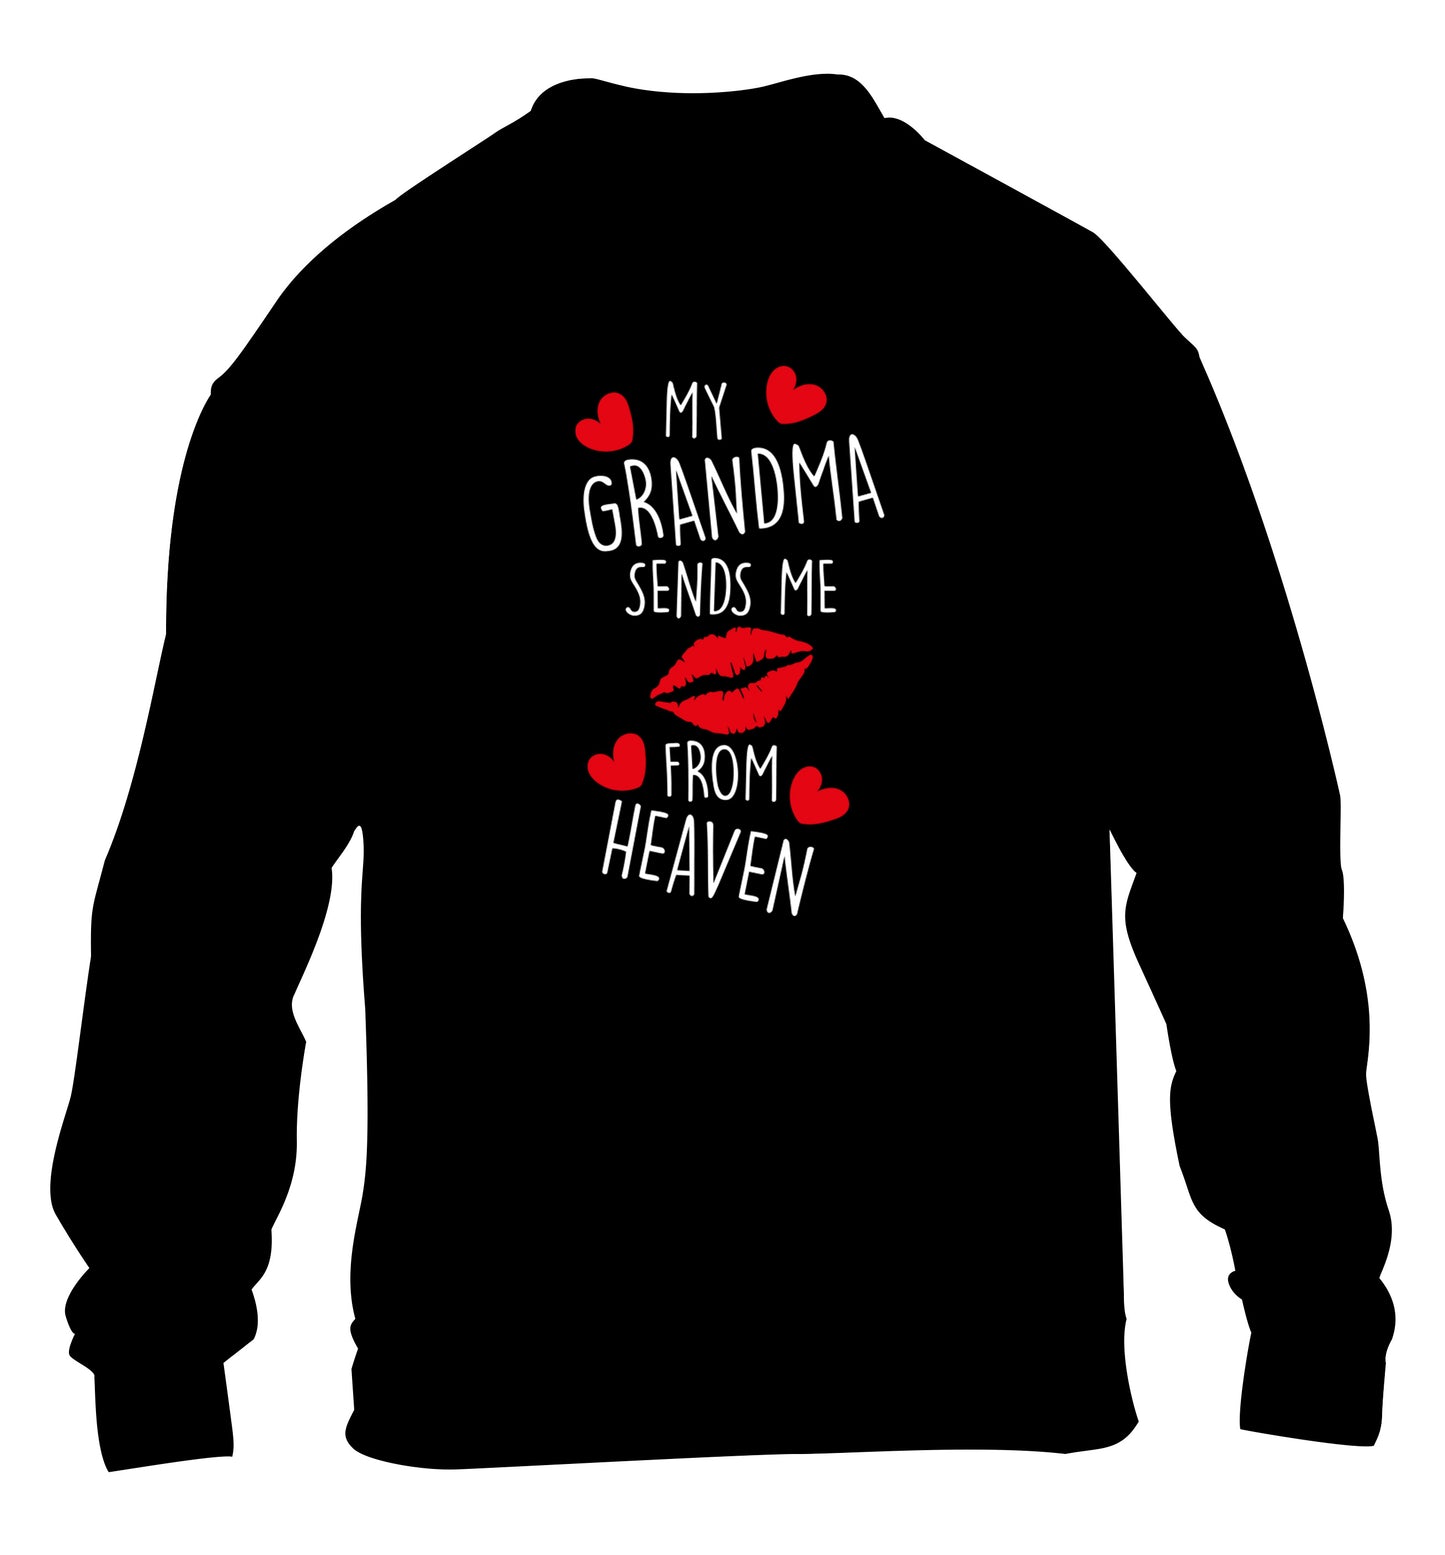 My grandma sends me kisses from heaven children's black sweater 12-14 Years